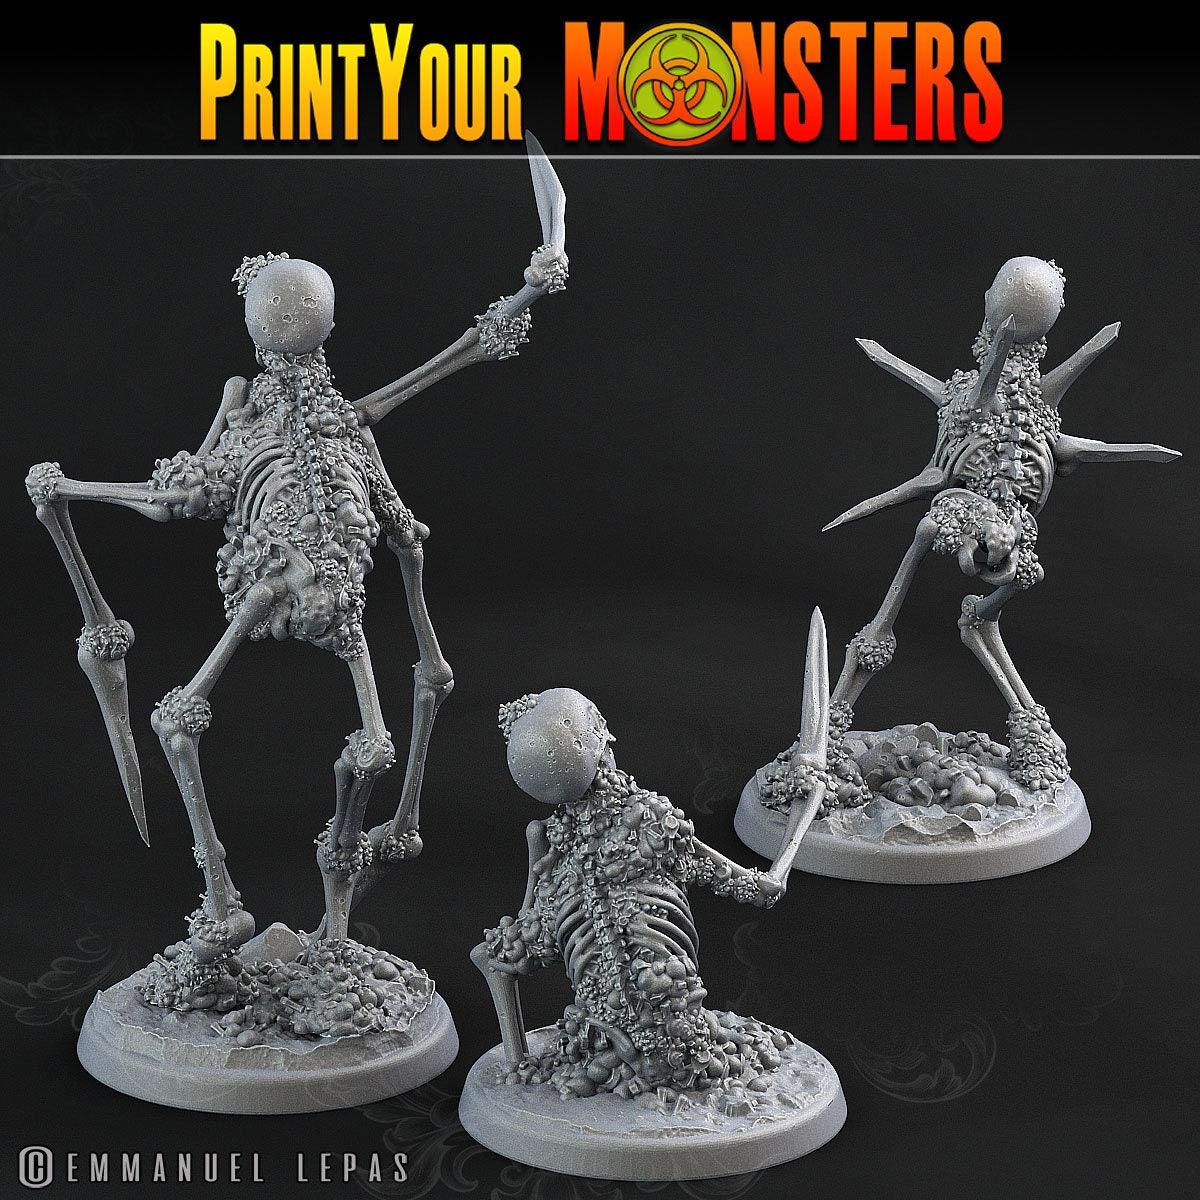 Skeleton Miniatures for D&D | Tabletop Gaming Figurines - Plague Miniatures shop for DnD Miniatures